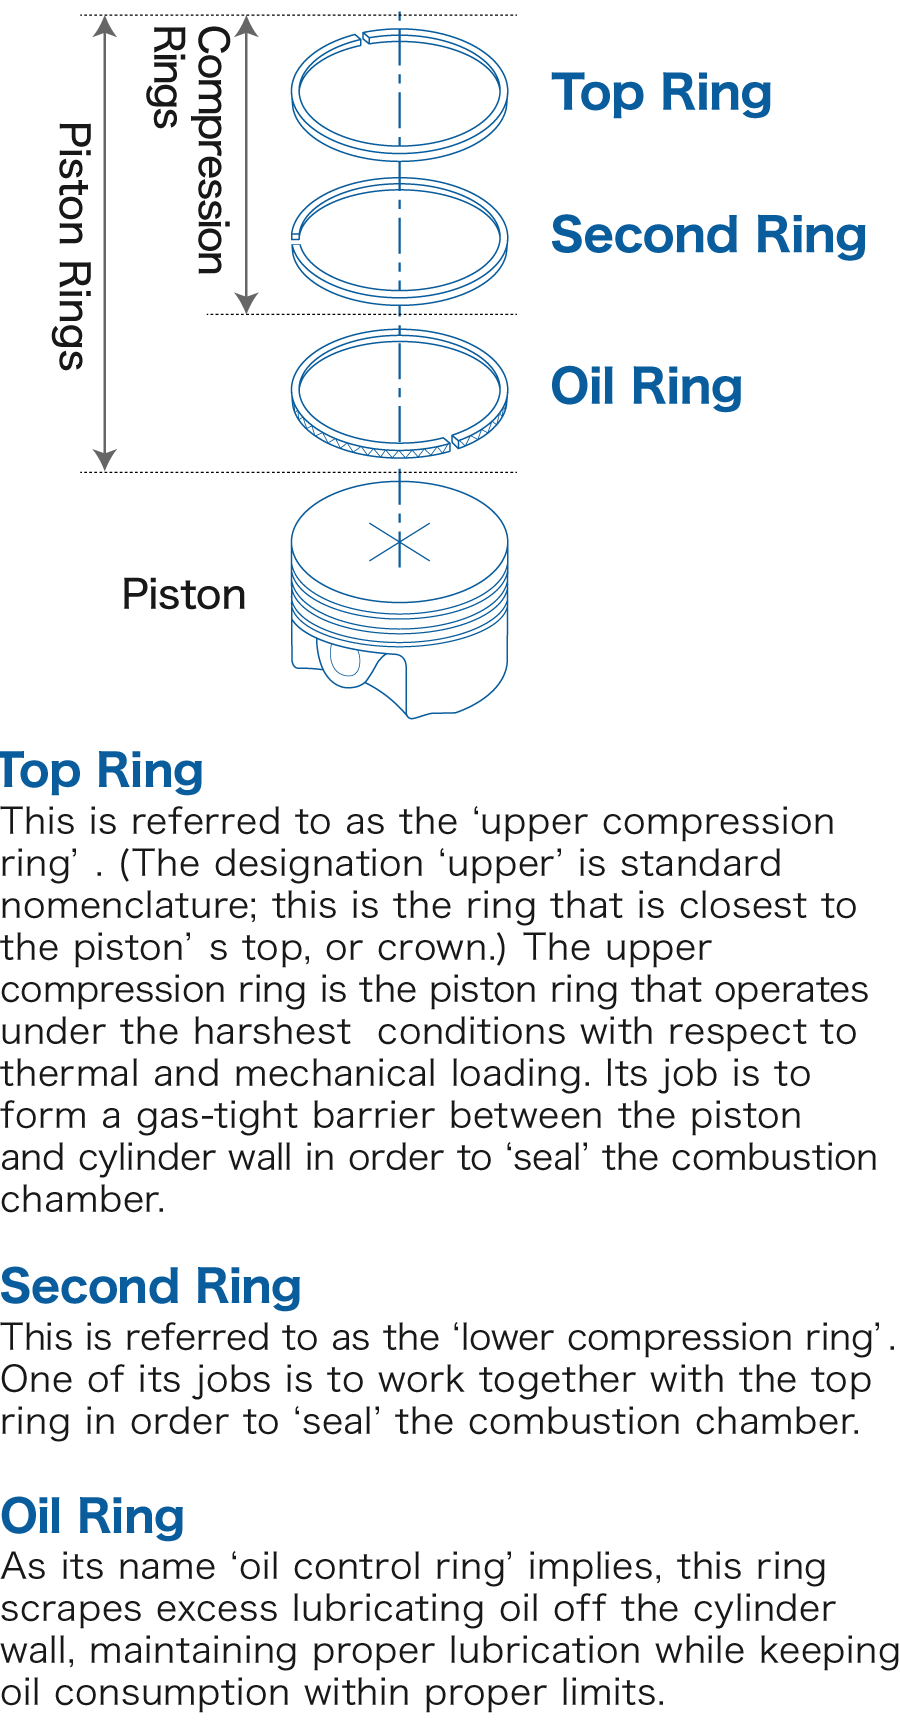 SM Engine Piston Rings 7 Days Return Policy